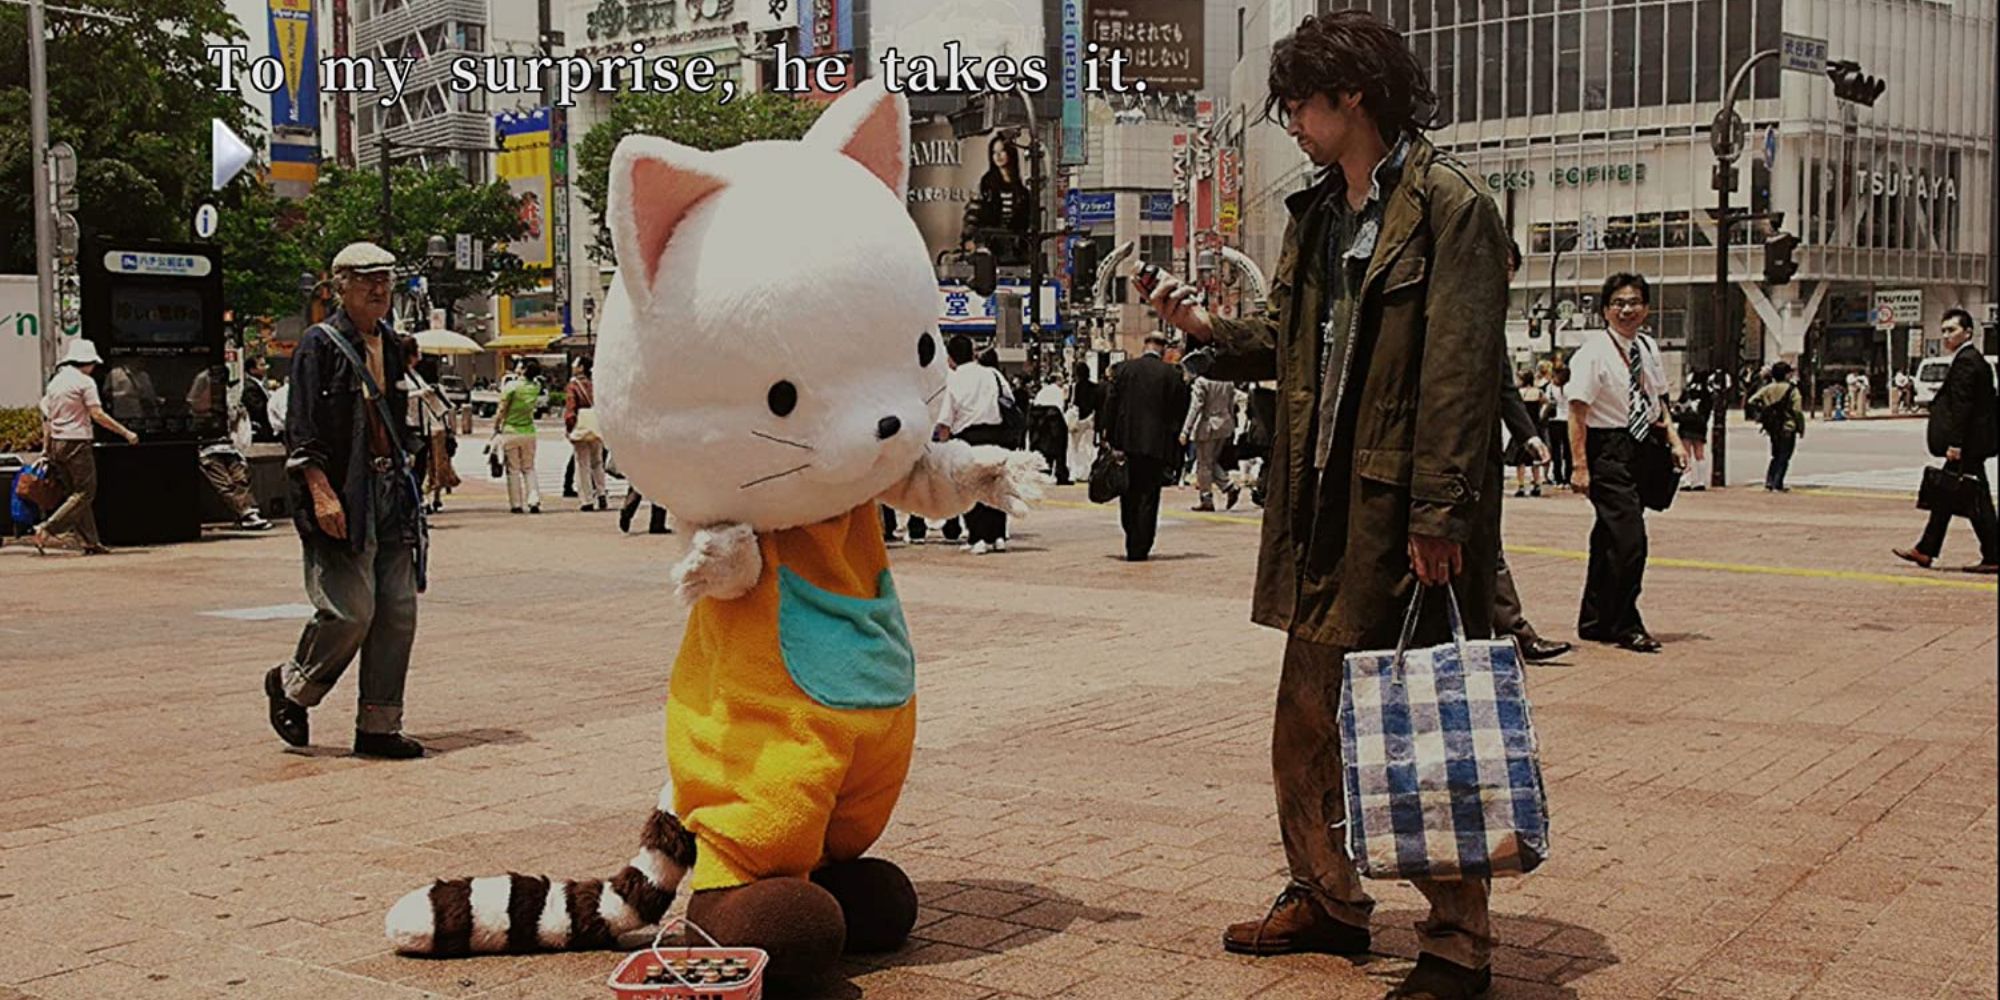 428: Shibuya Scramble wide shot of man in cat costume talking to homeless man on the busy Shibuya Crossing